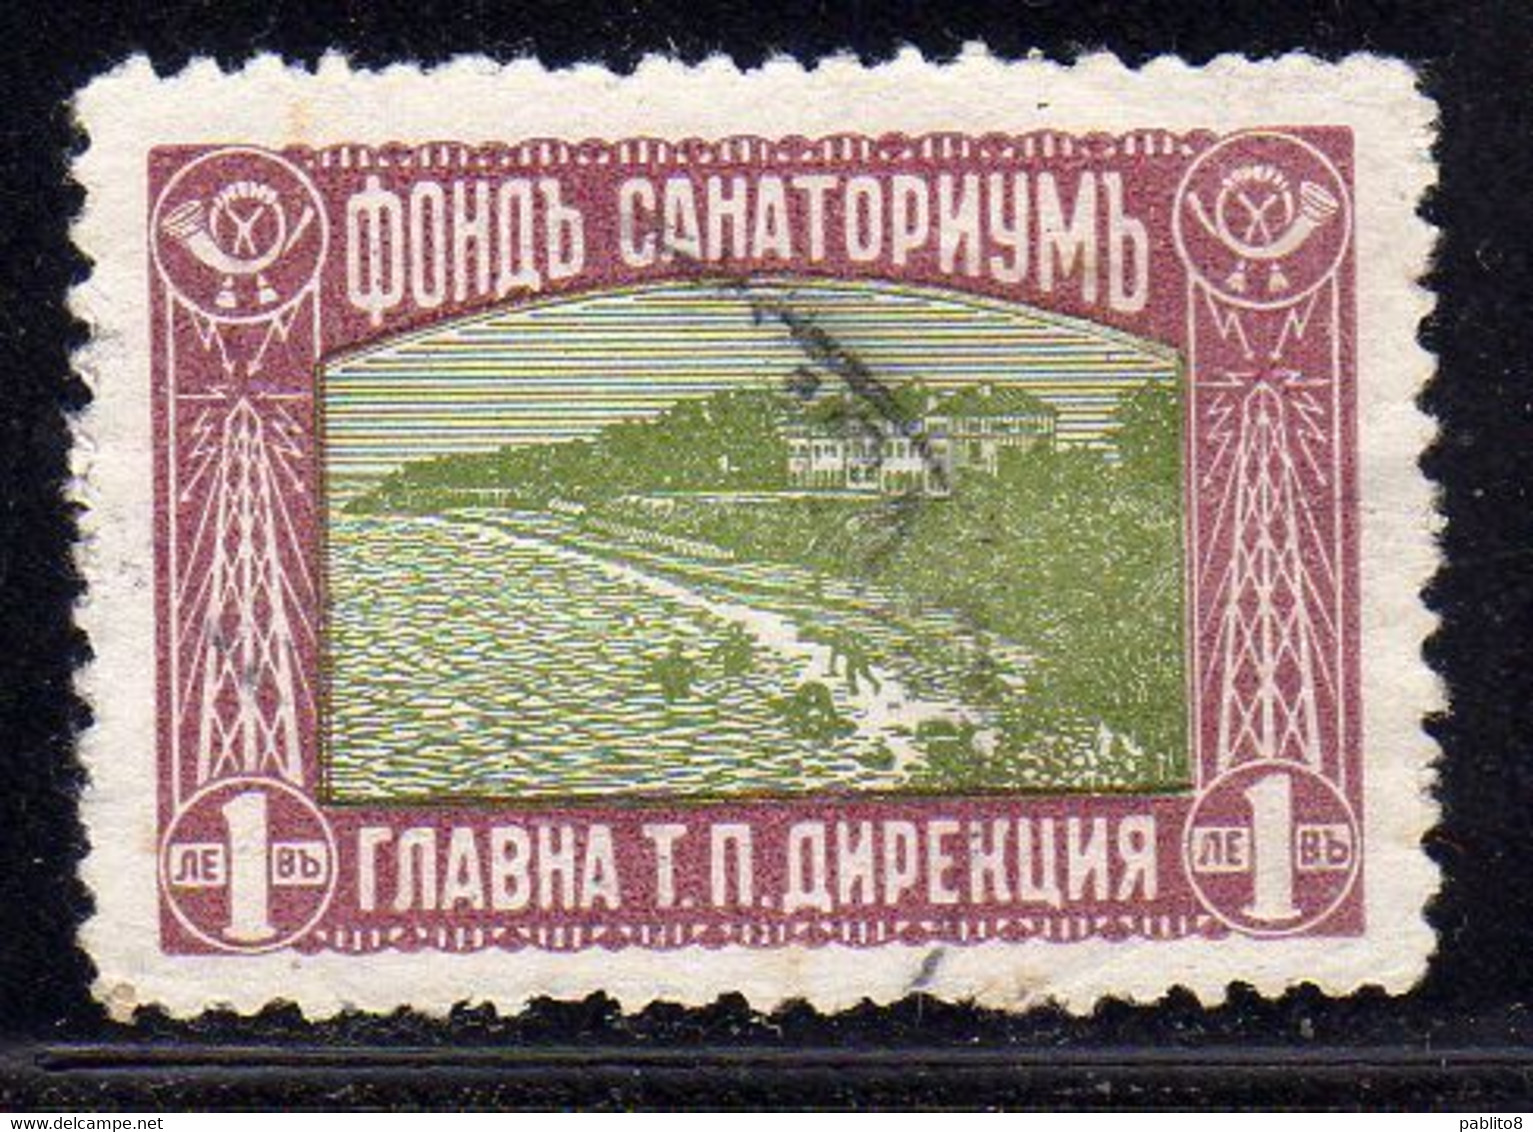 BULGARIA BULGARIE BULGARIEN 1930 1933 POSTAL TAX STAMPS ST CONSTANTINE SANATORIUM 1L USED USATO OBLITERE' - Postage Due